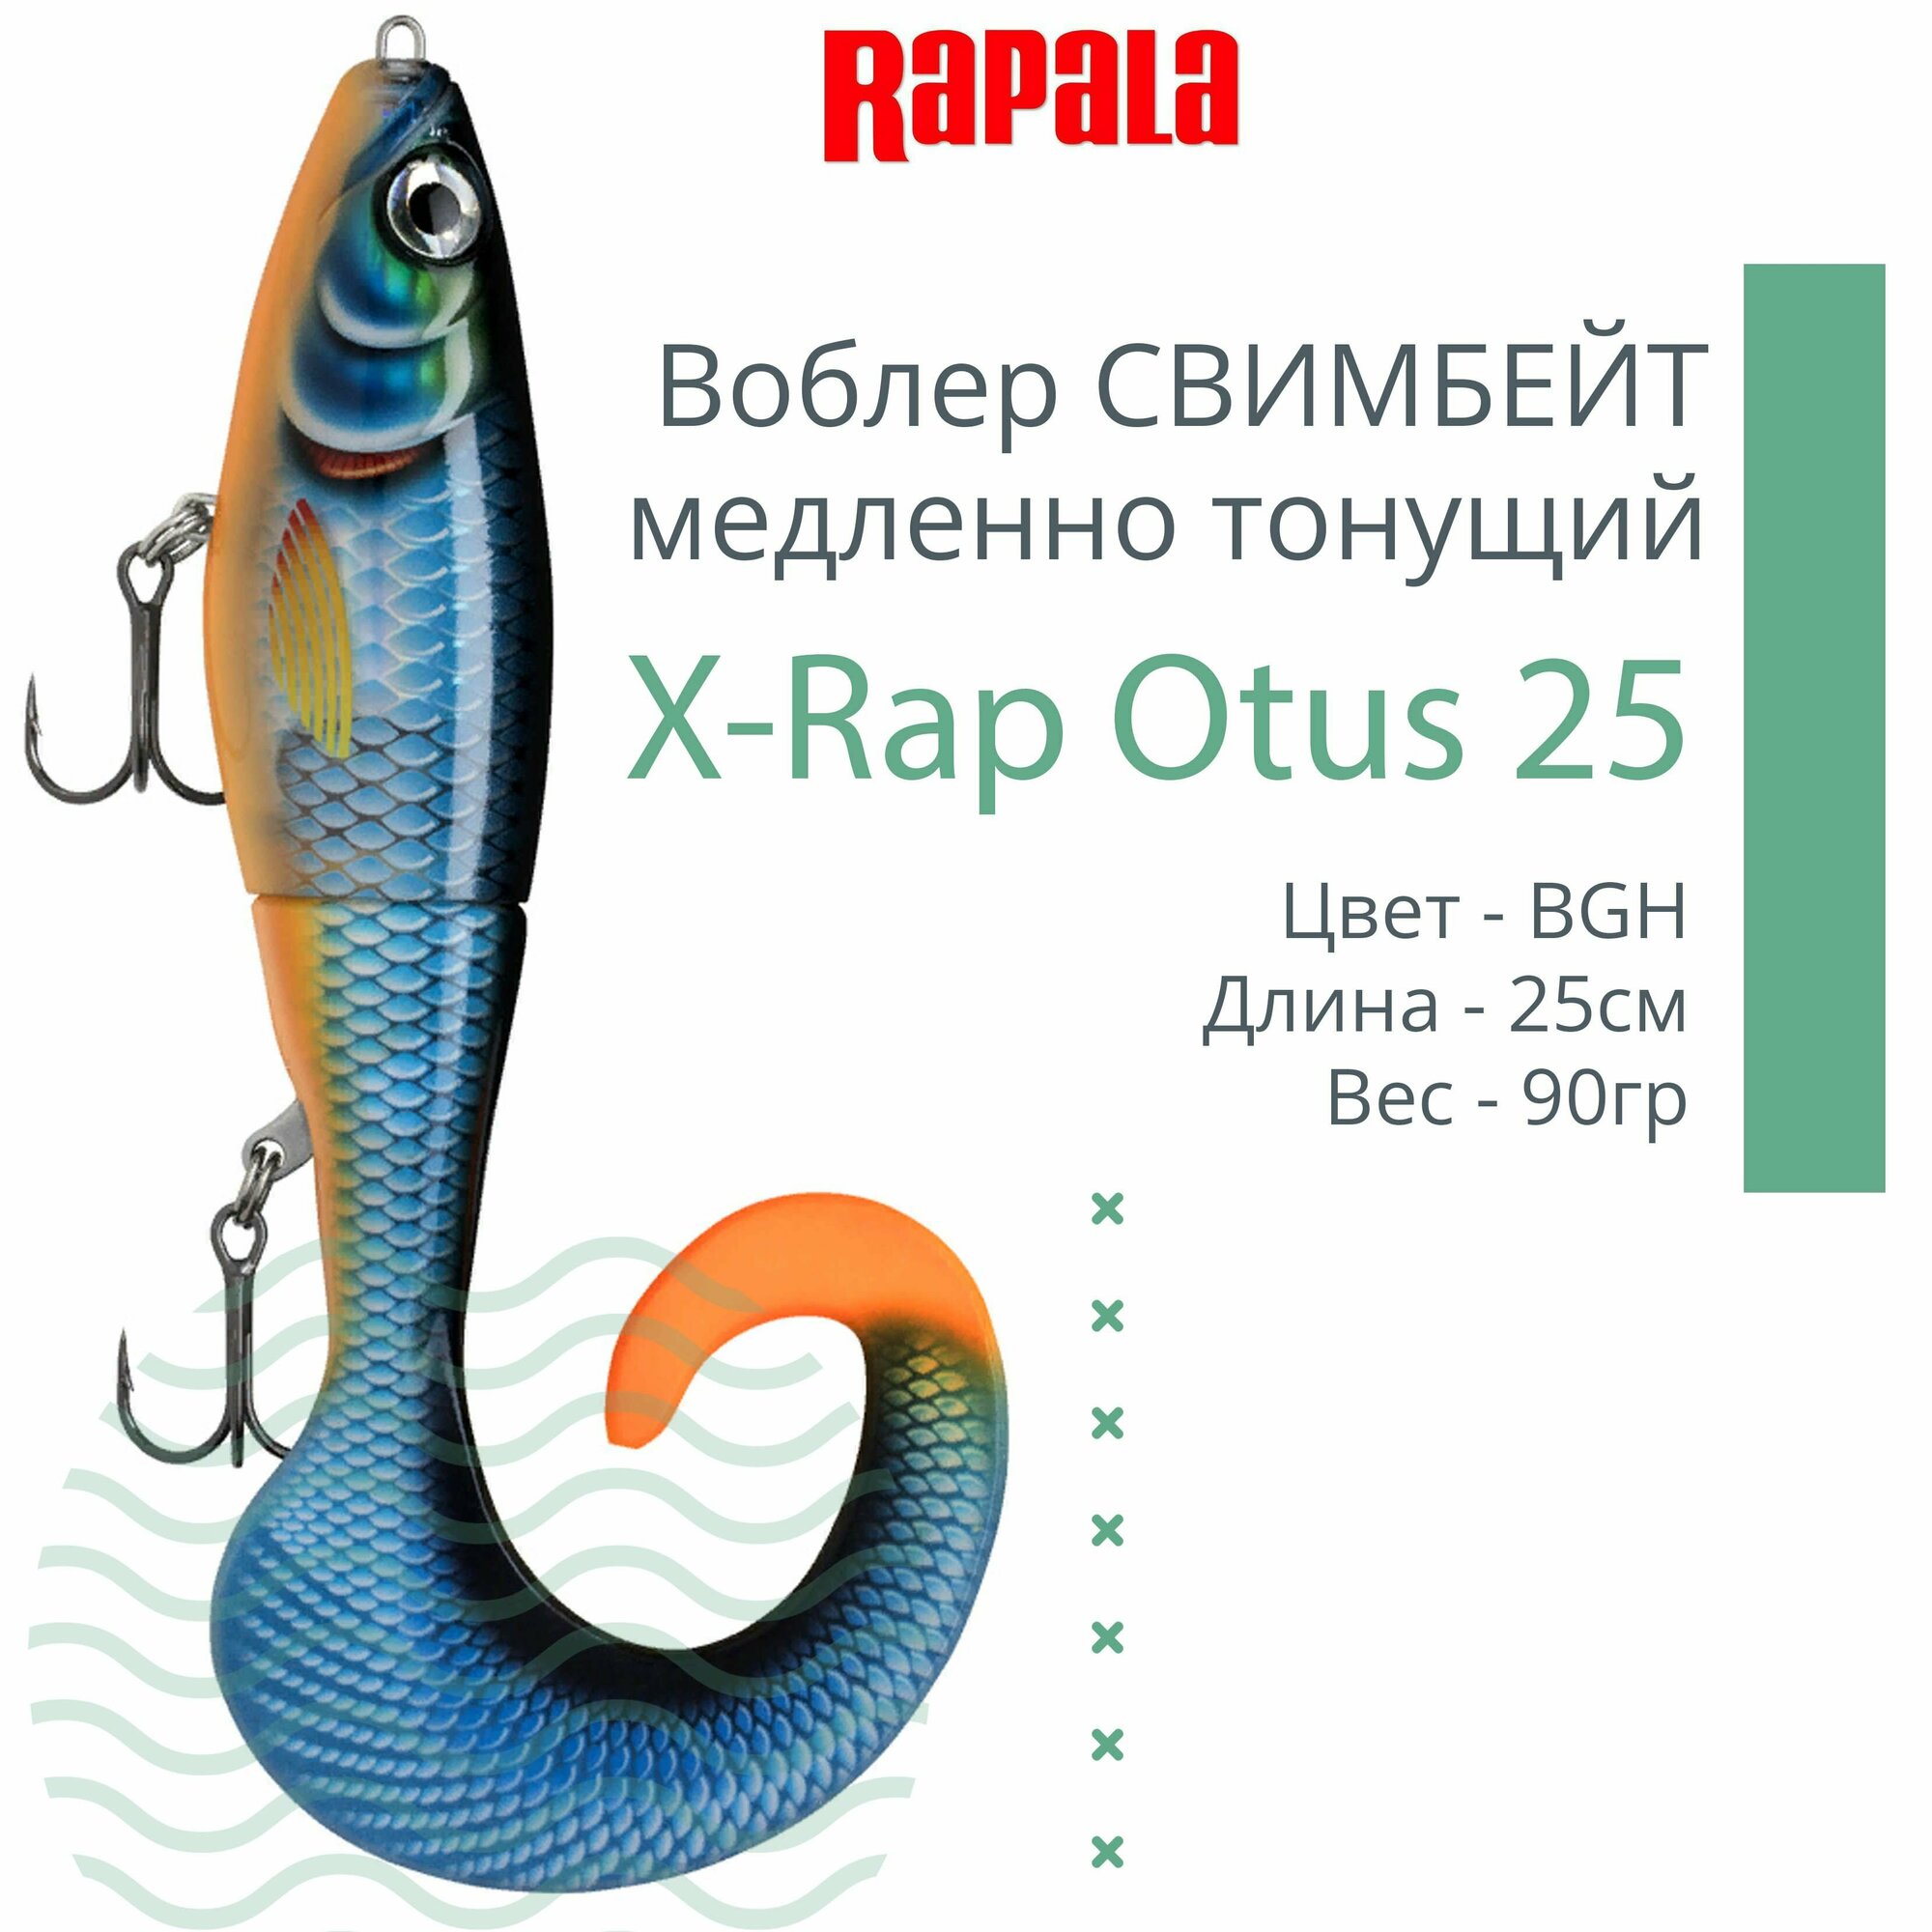 Воблер для рыбалки RAPALA X-Rap Otus 25, 25см, 90гр, цвет BGH, медленно тонущий